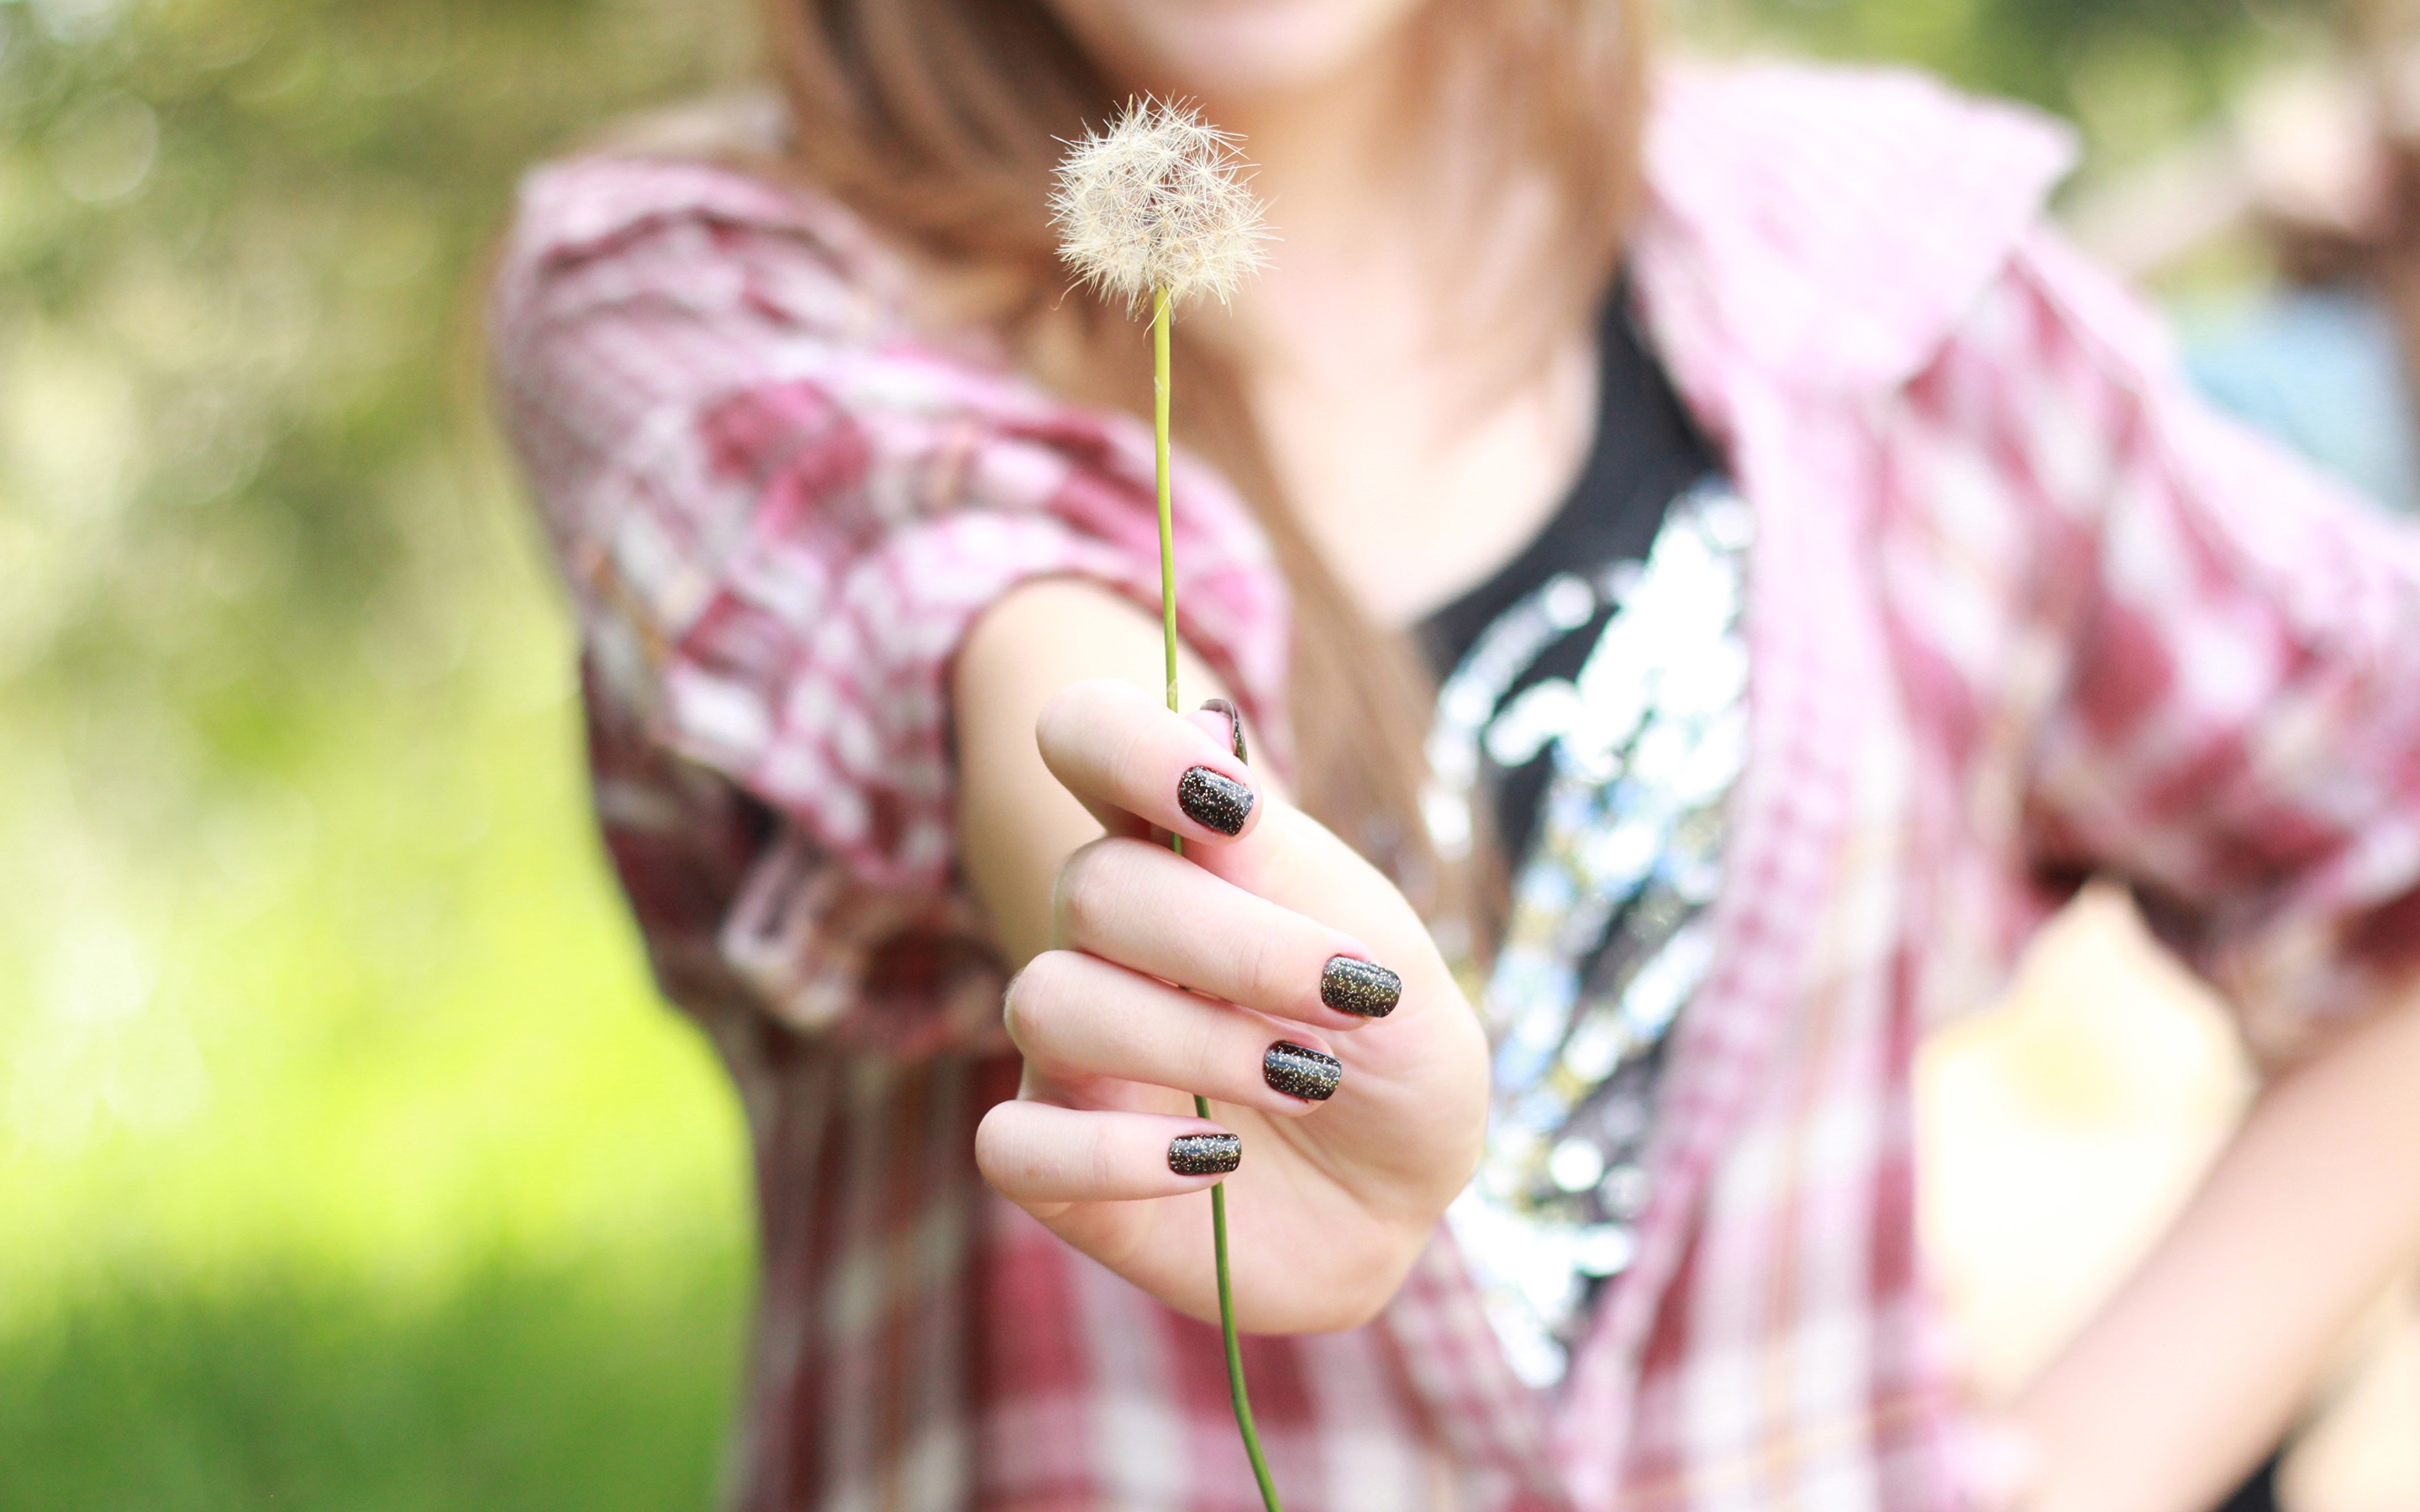 Image: Girl, hand, manicure, dandelion, blur